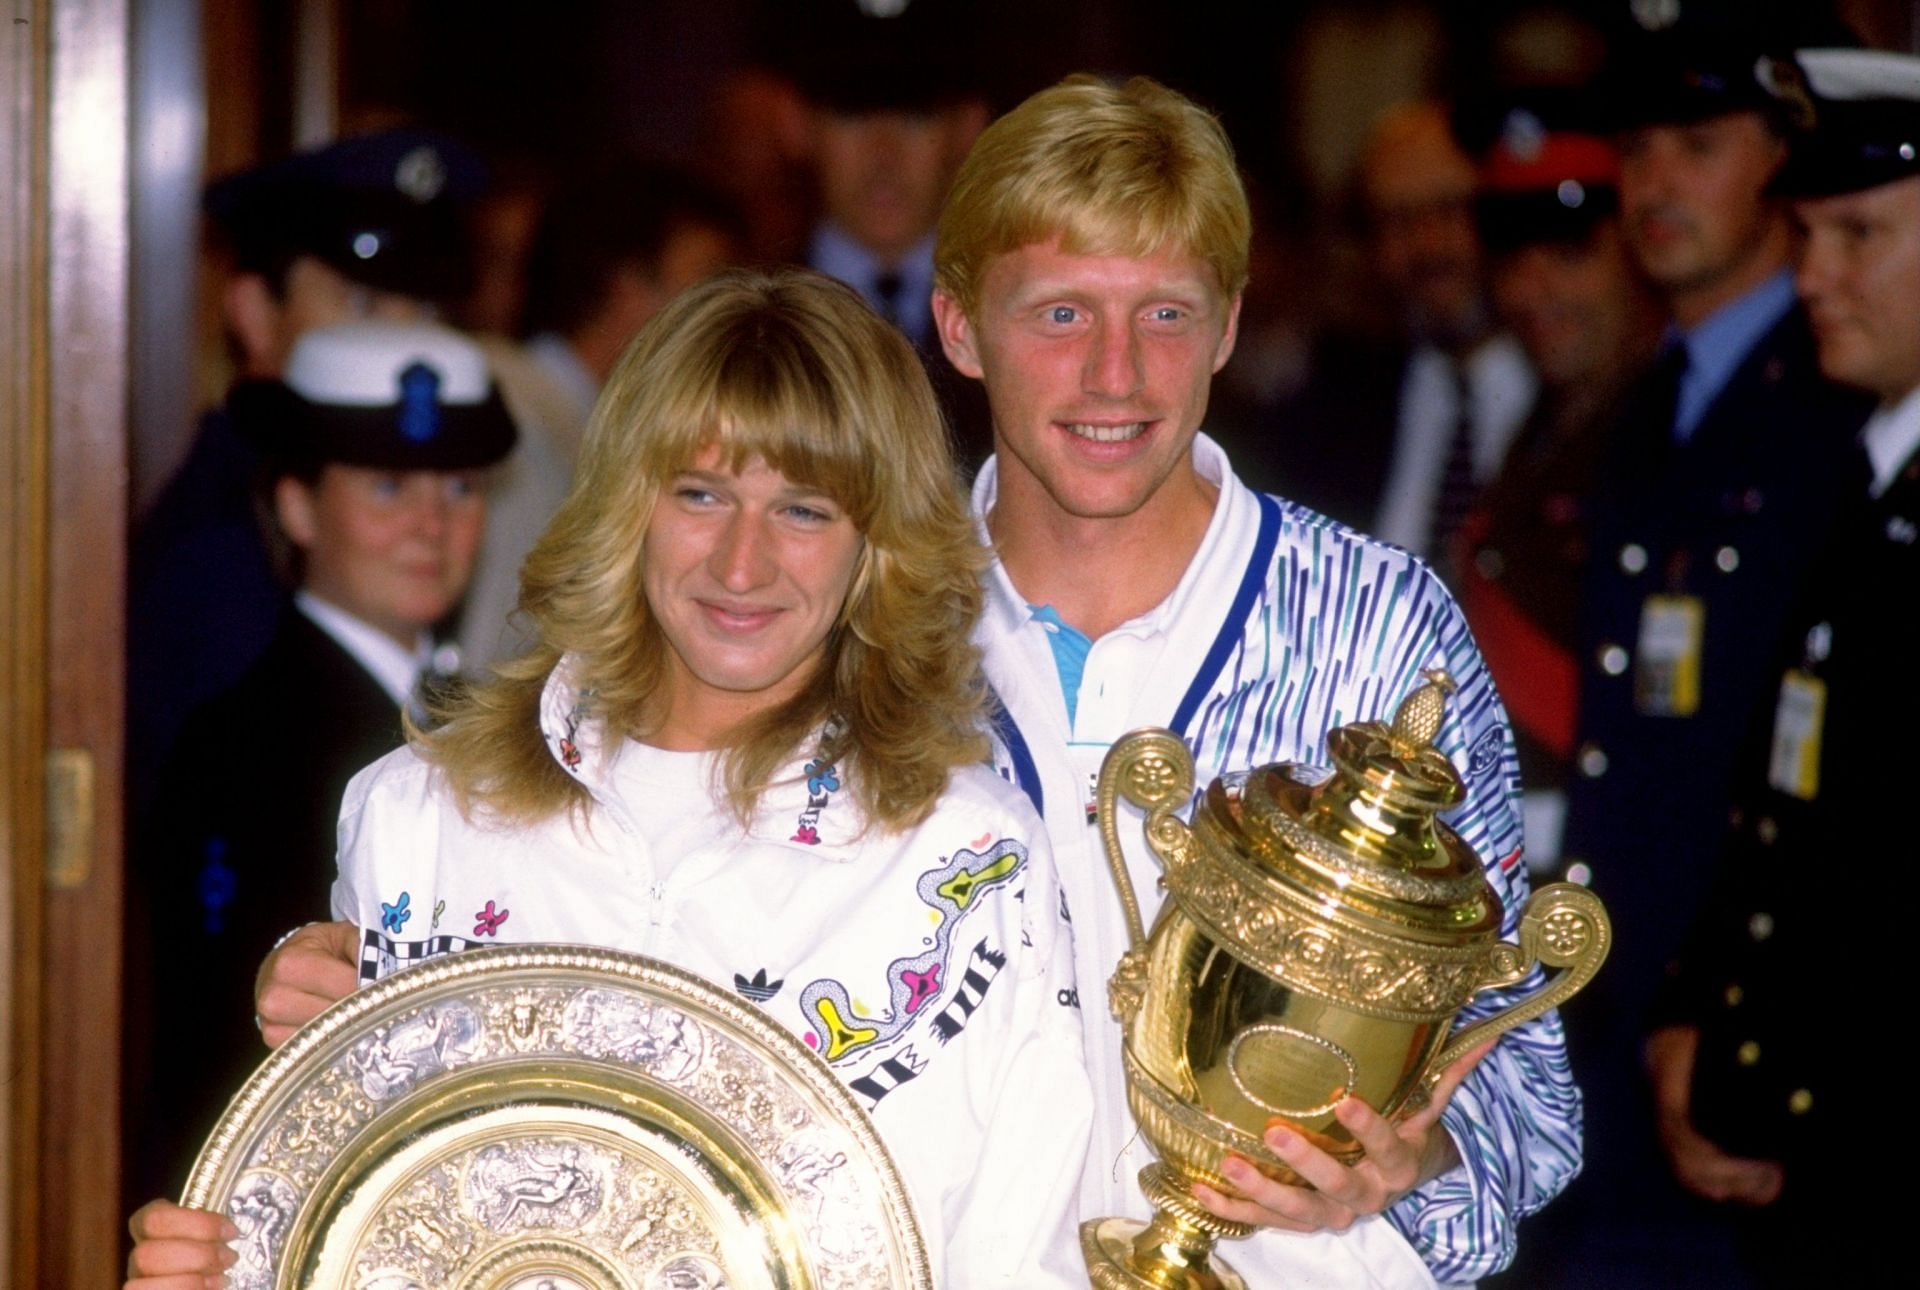 Steffi Graf and Boris Becker with their 1989 Wimbledon trophies